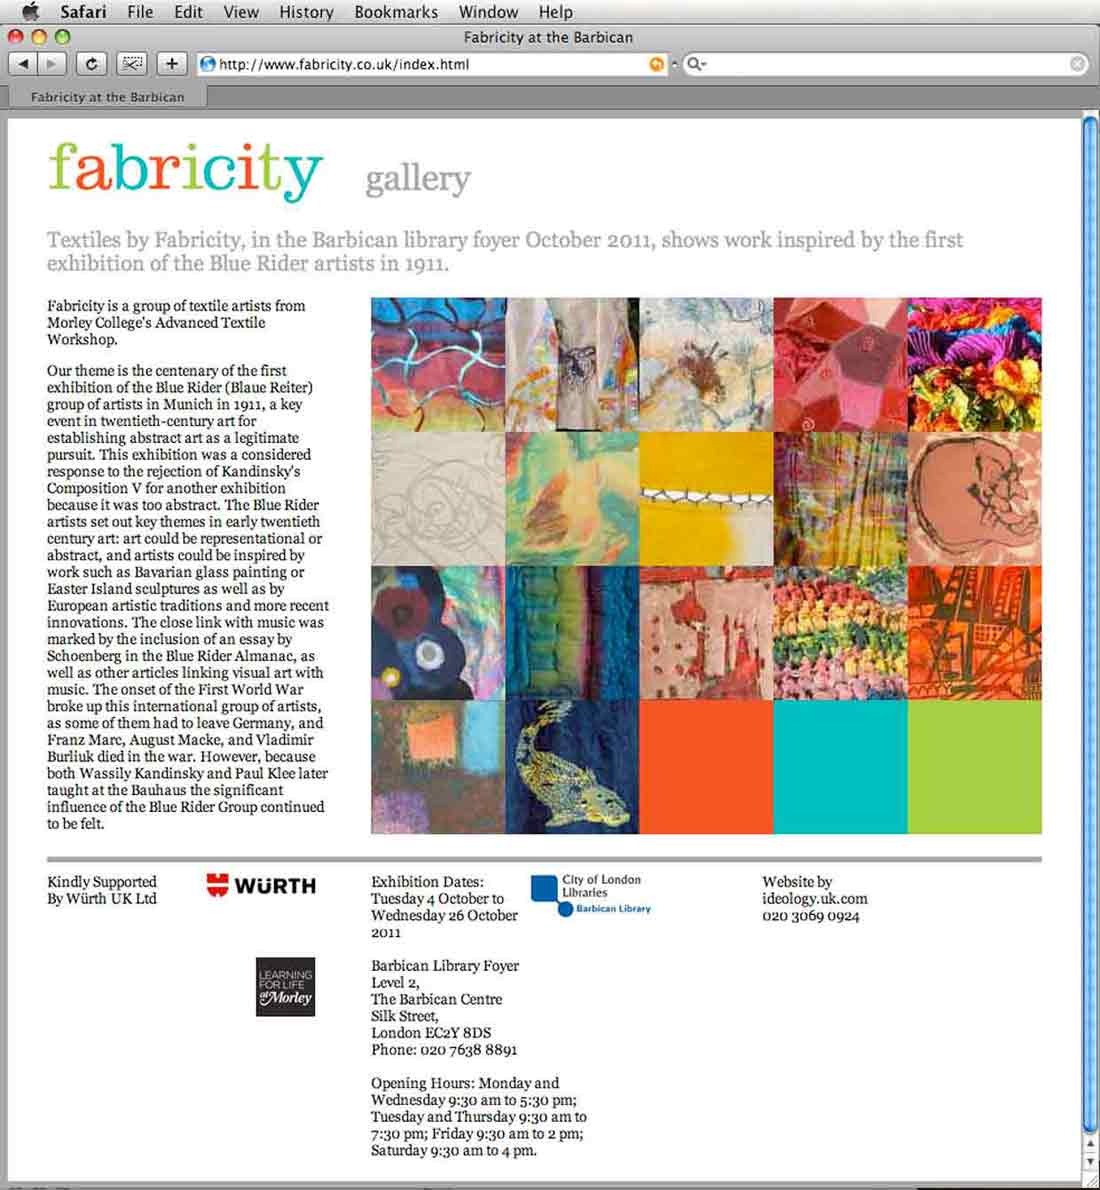 Fabricity website homepage designed by ideology.uk.com